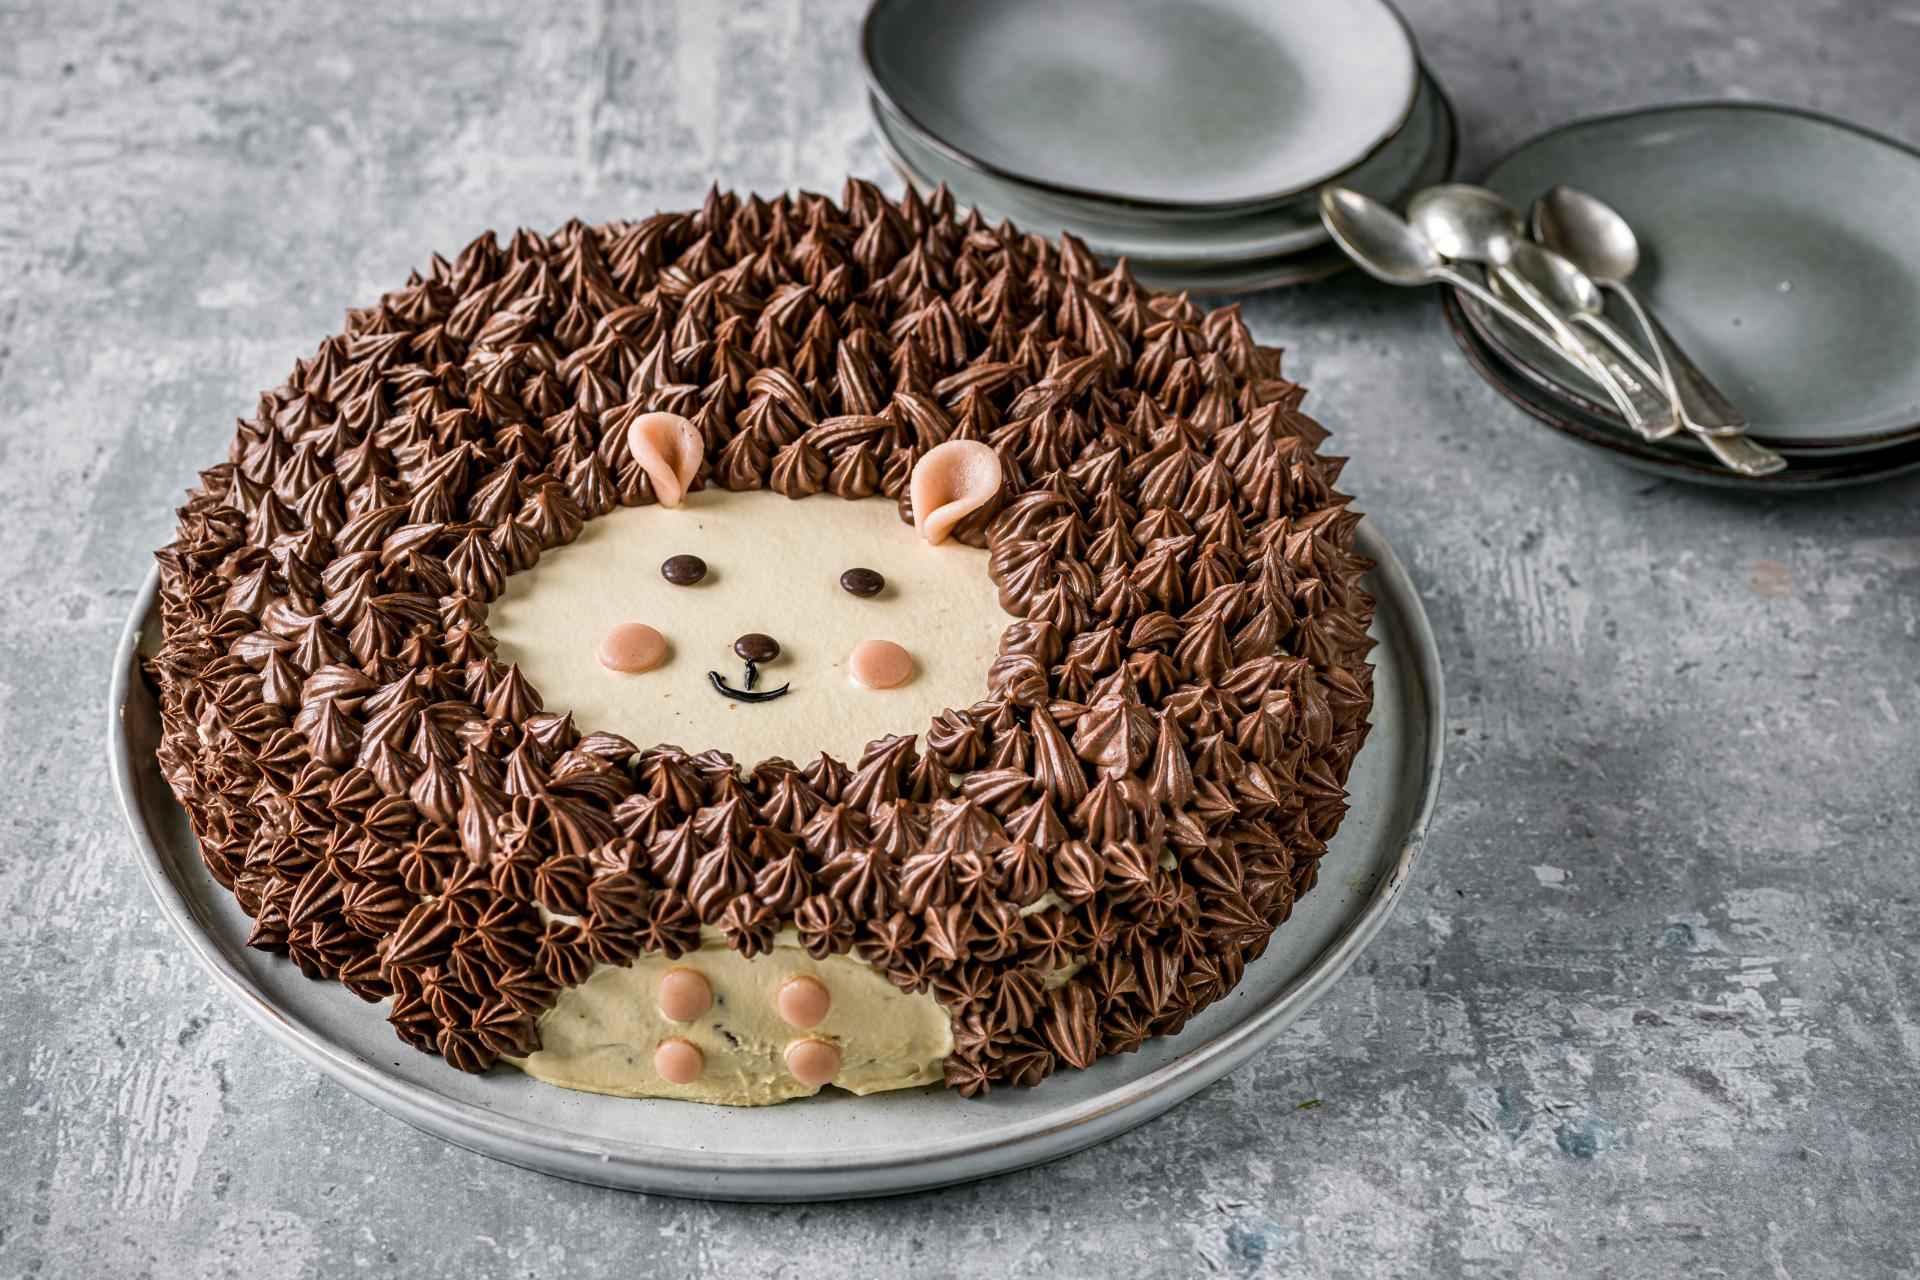 How to Make a Hedgehog Birthday Cake - XO, Katie Rosario